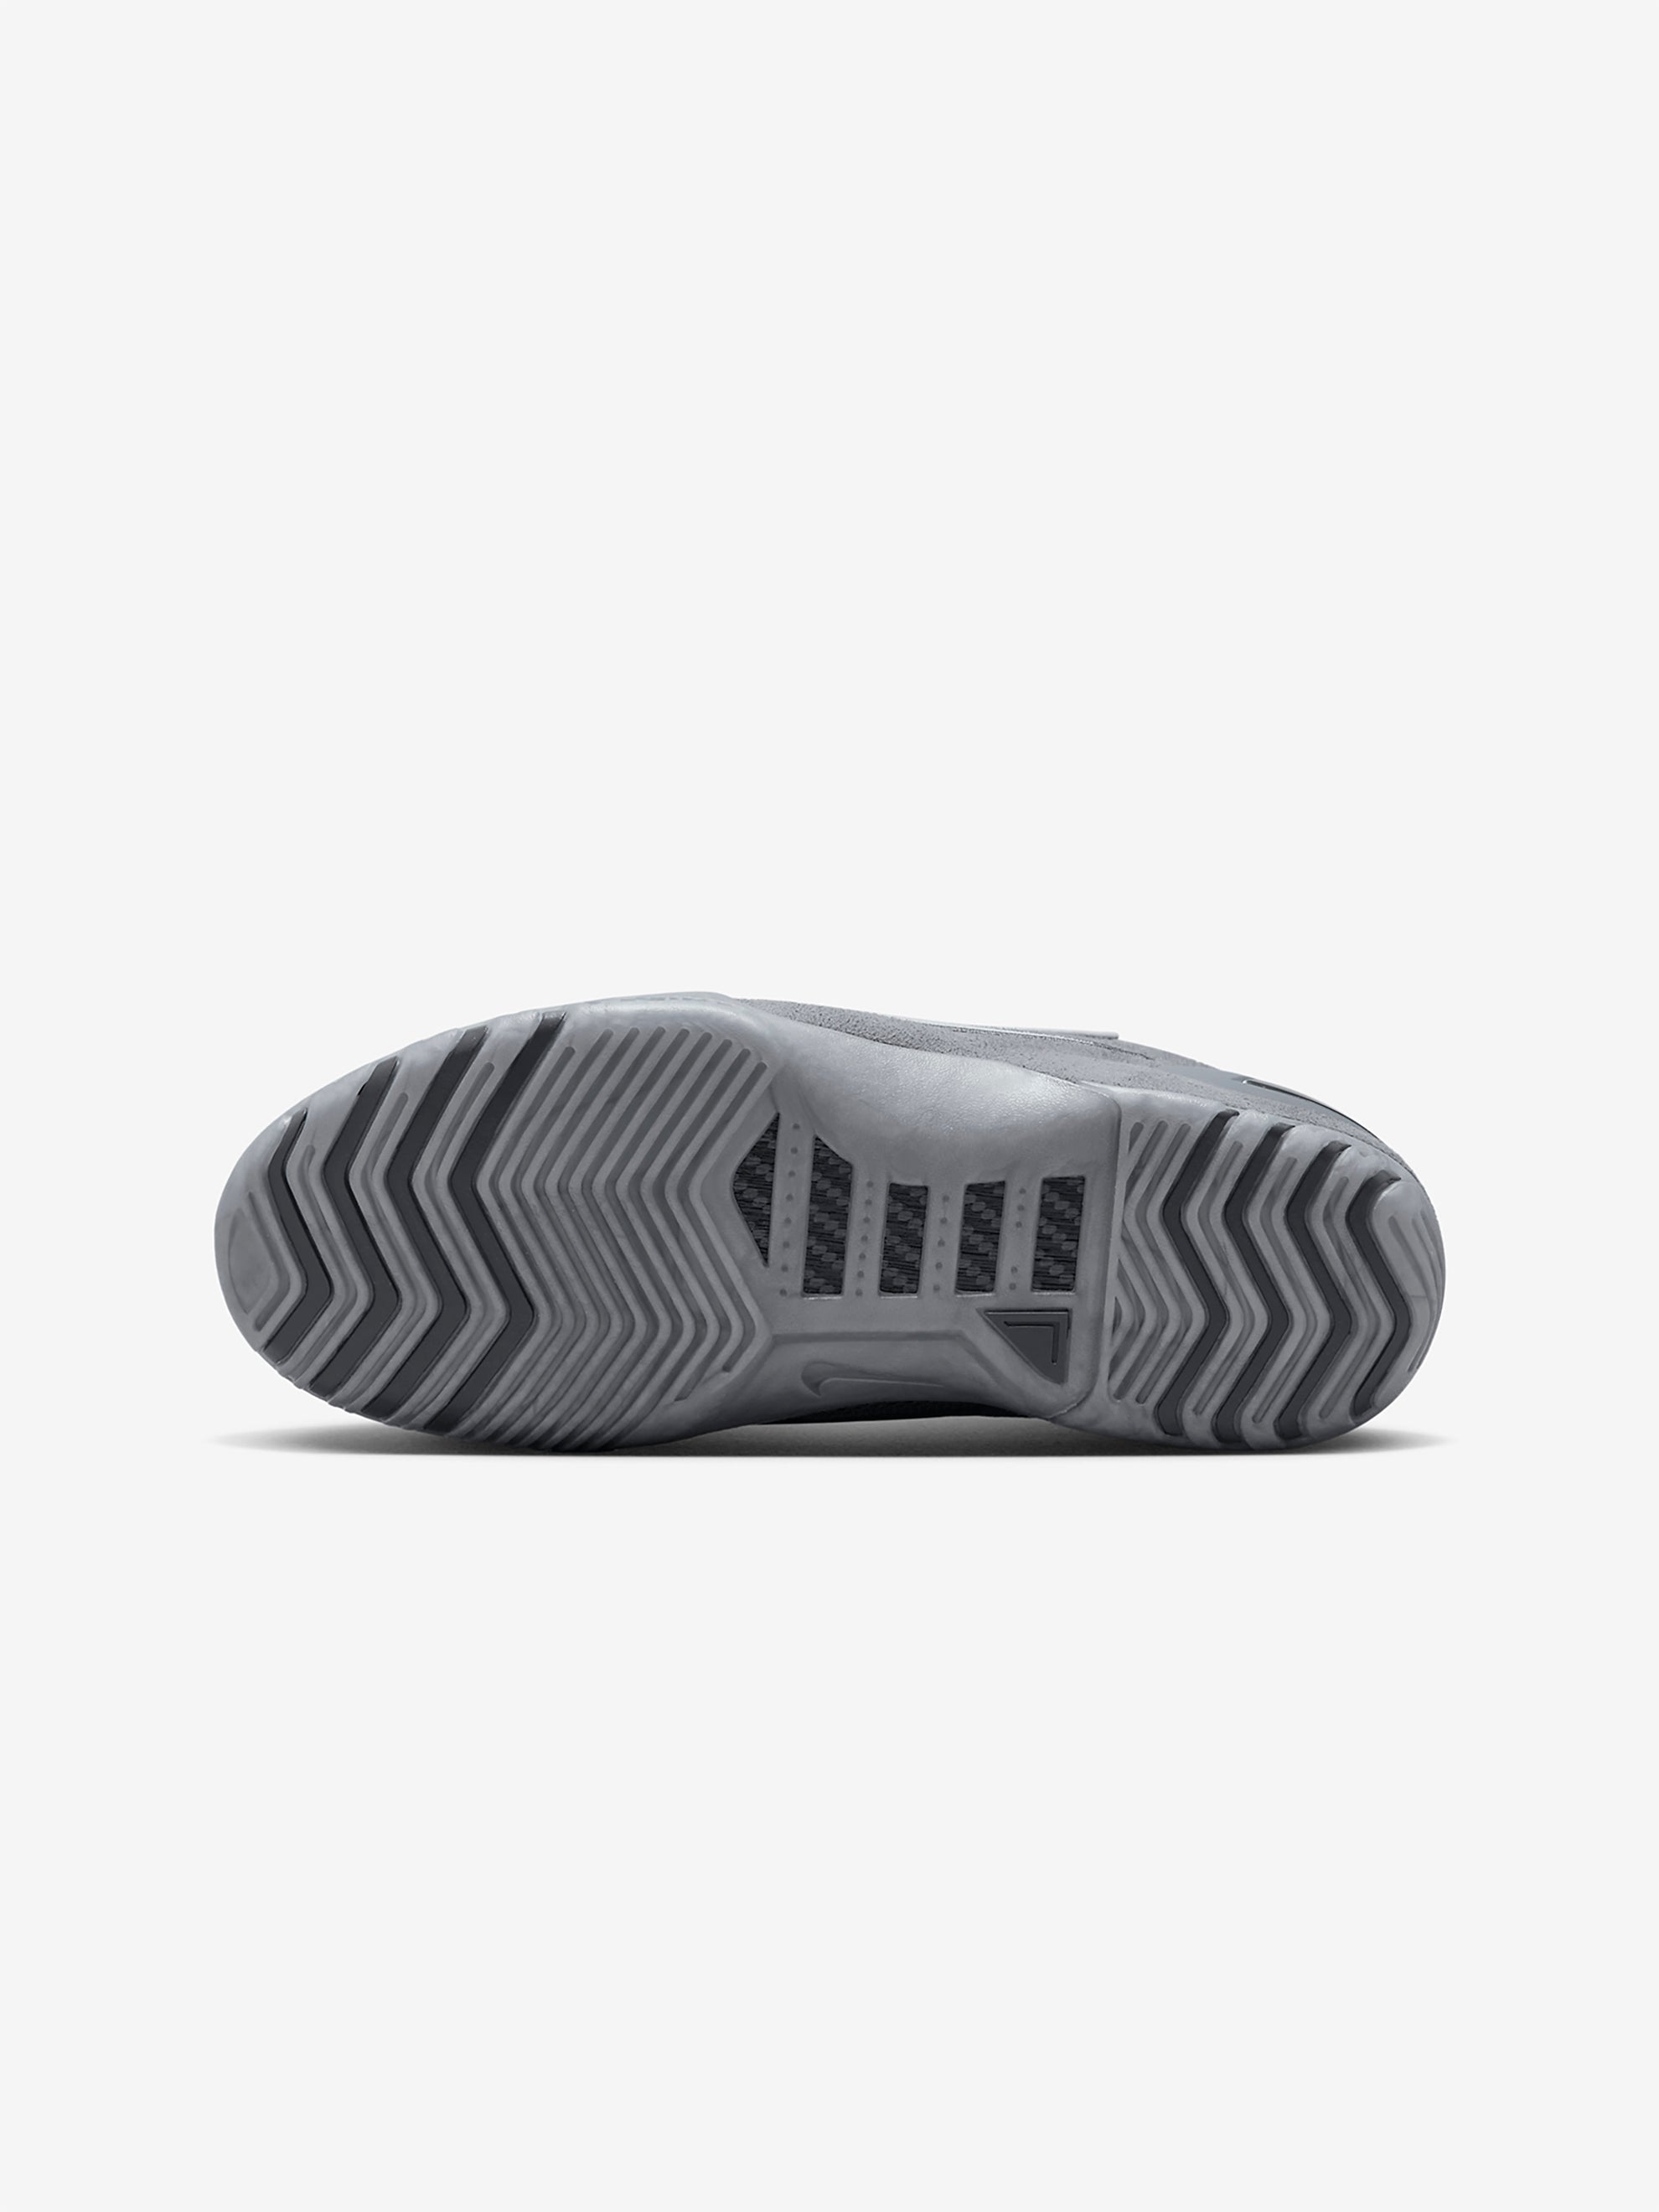 Nike Air Zoom Generation (Dark Grey/Wolf Grey-Anthracite)